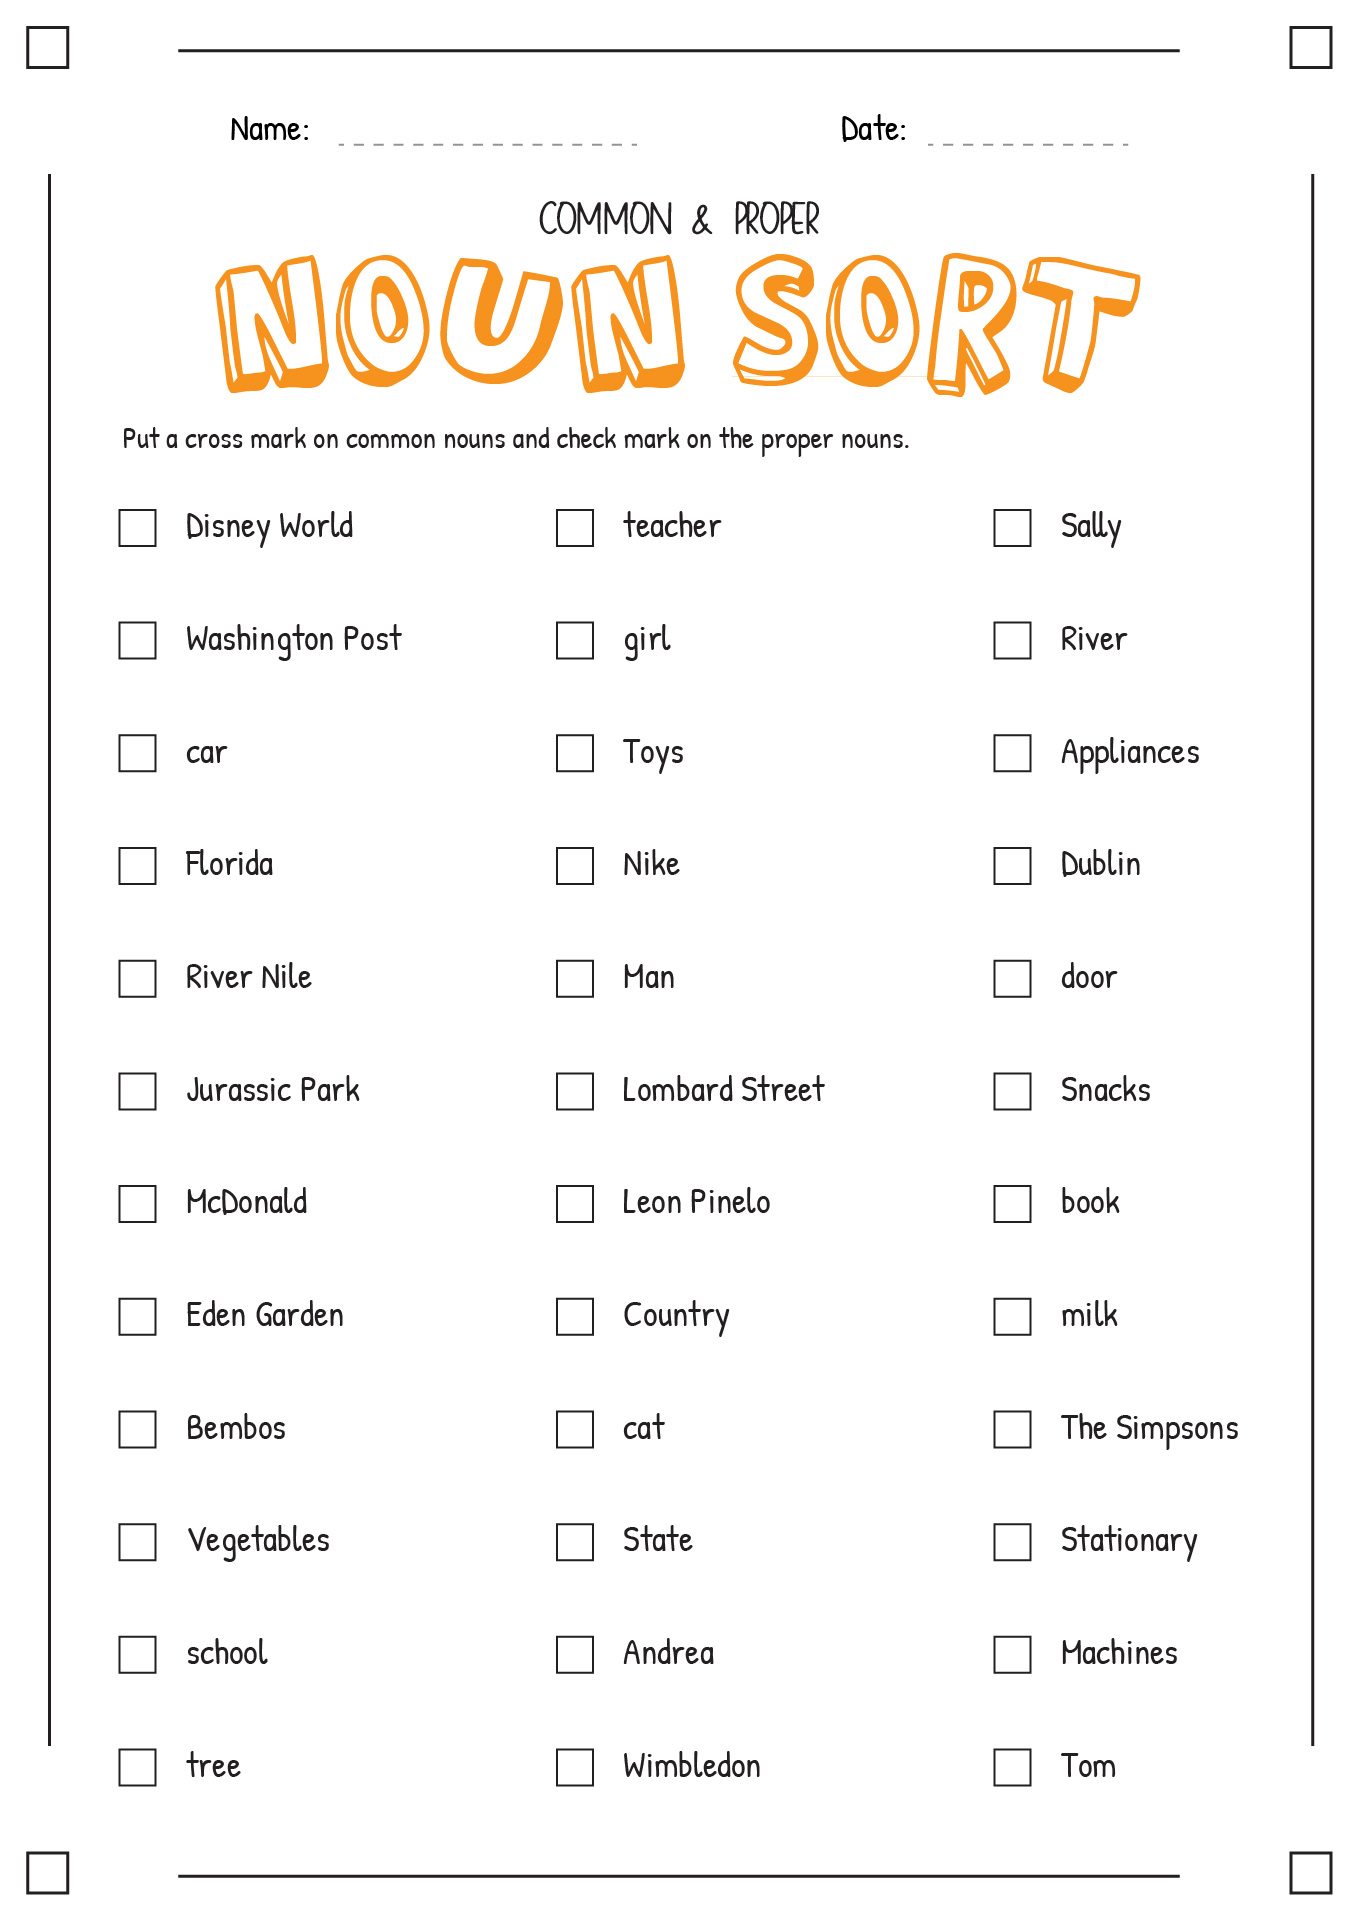 Common and Proper Noun Sort Worksheet Image